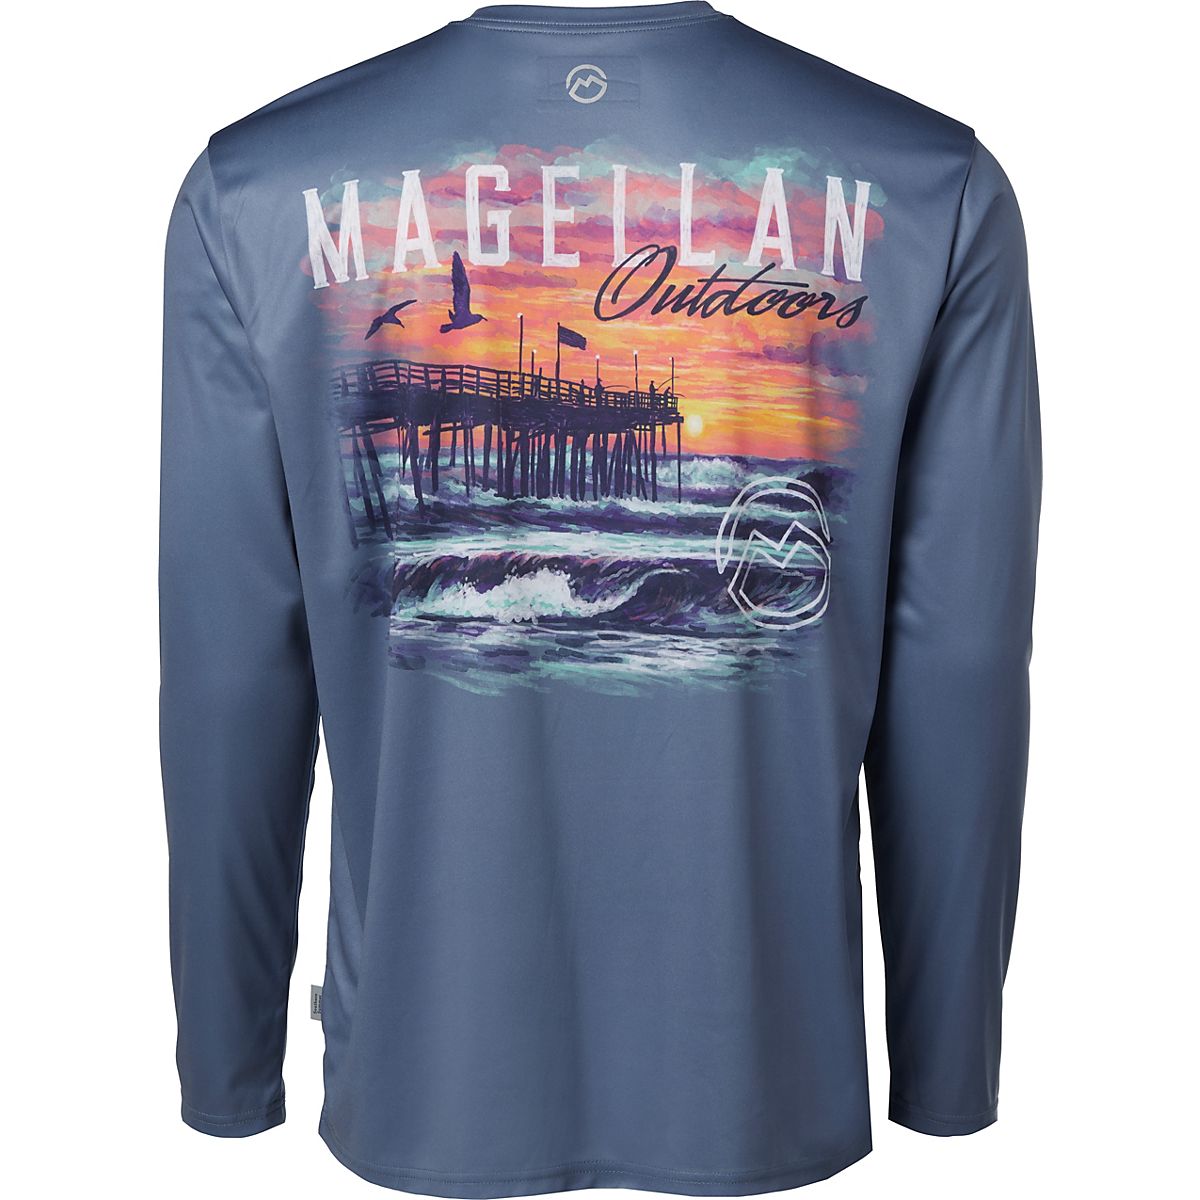 Magellan Outdoors, Shirts